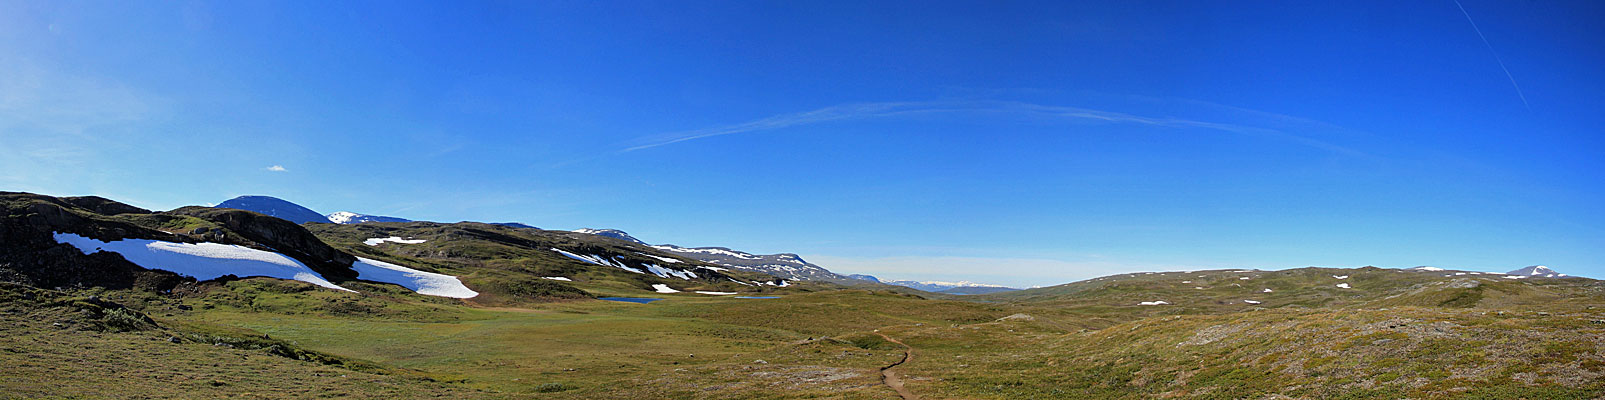 Auf den Weg ins Tal des Råtokjåkkå